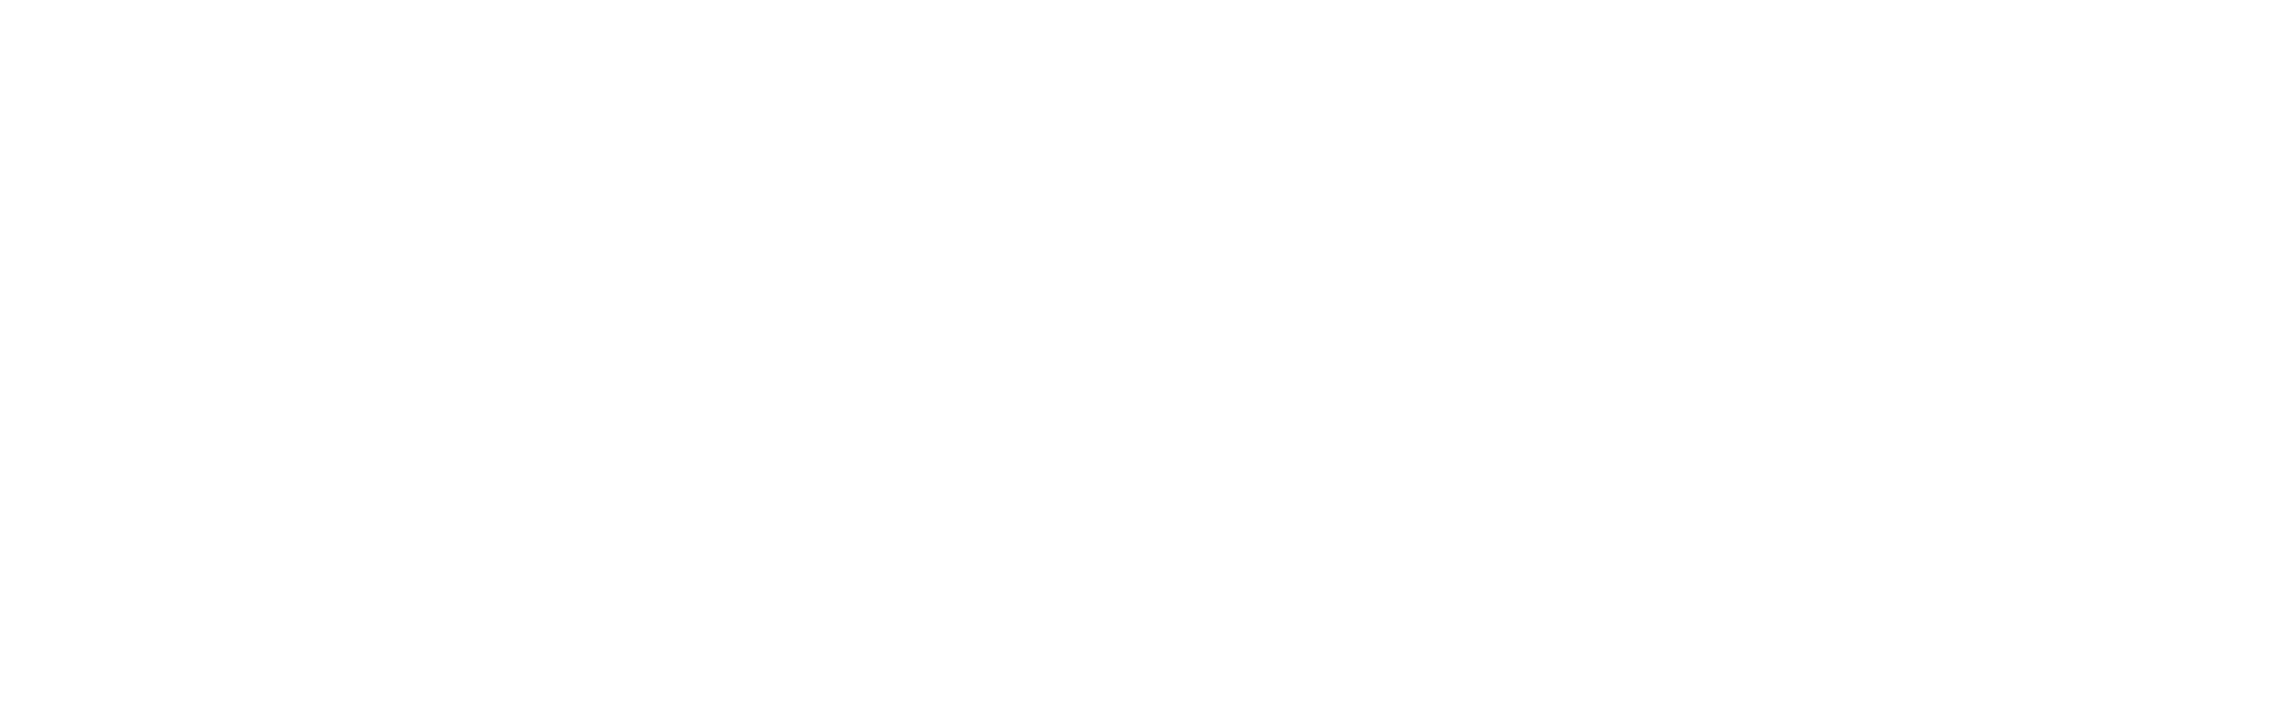 AIScraper logo